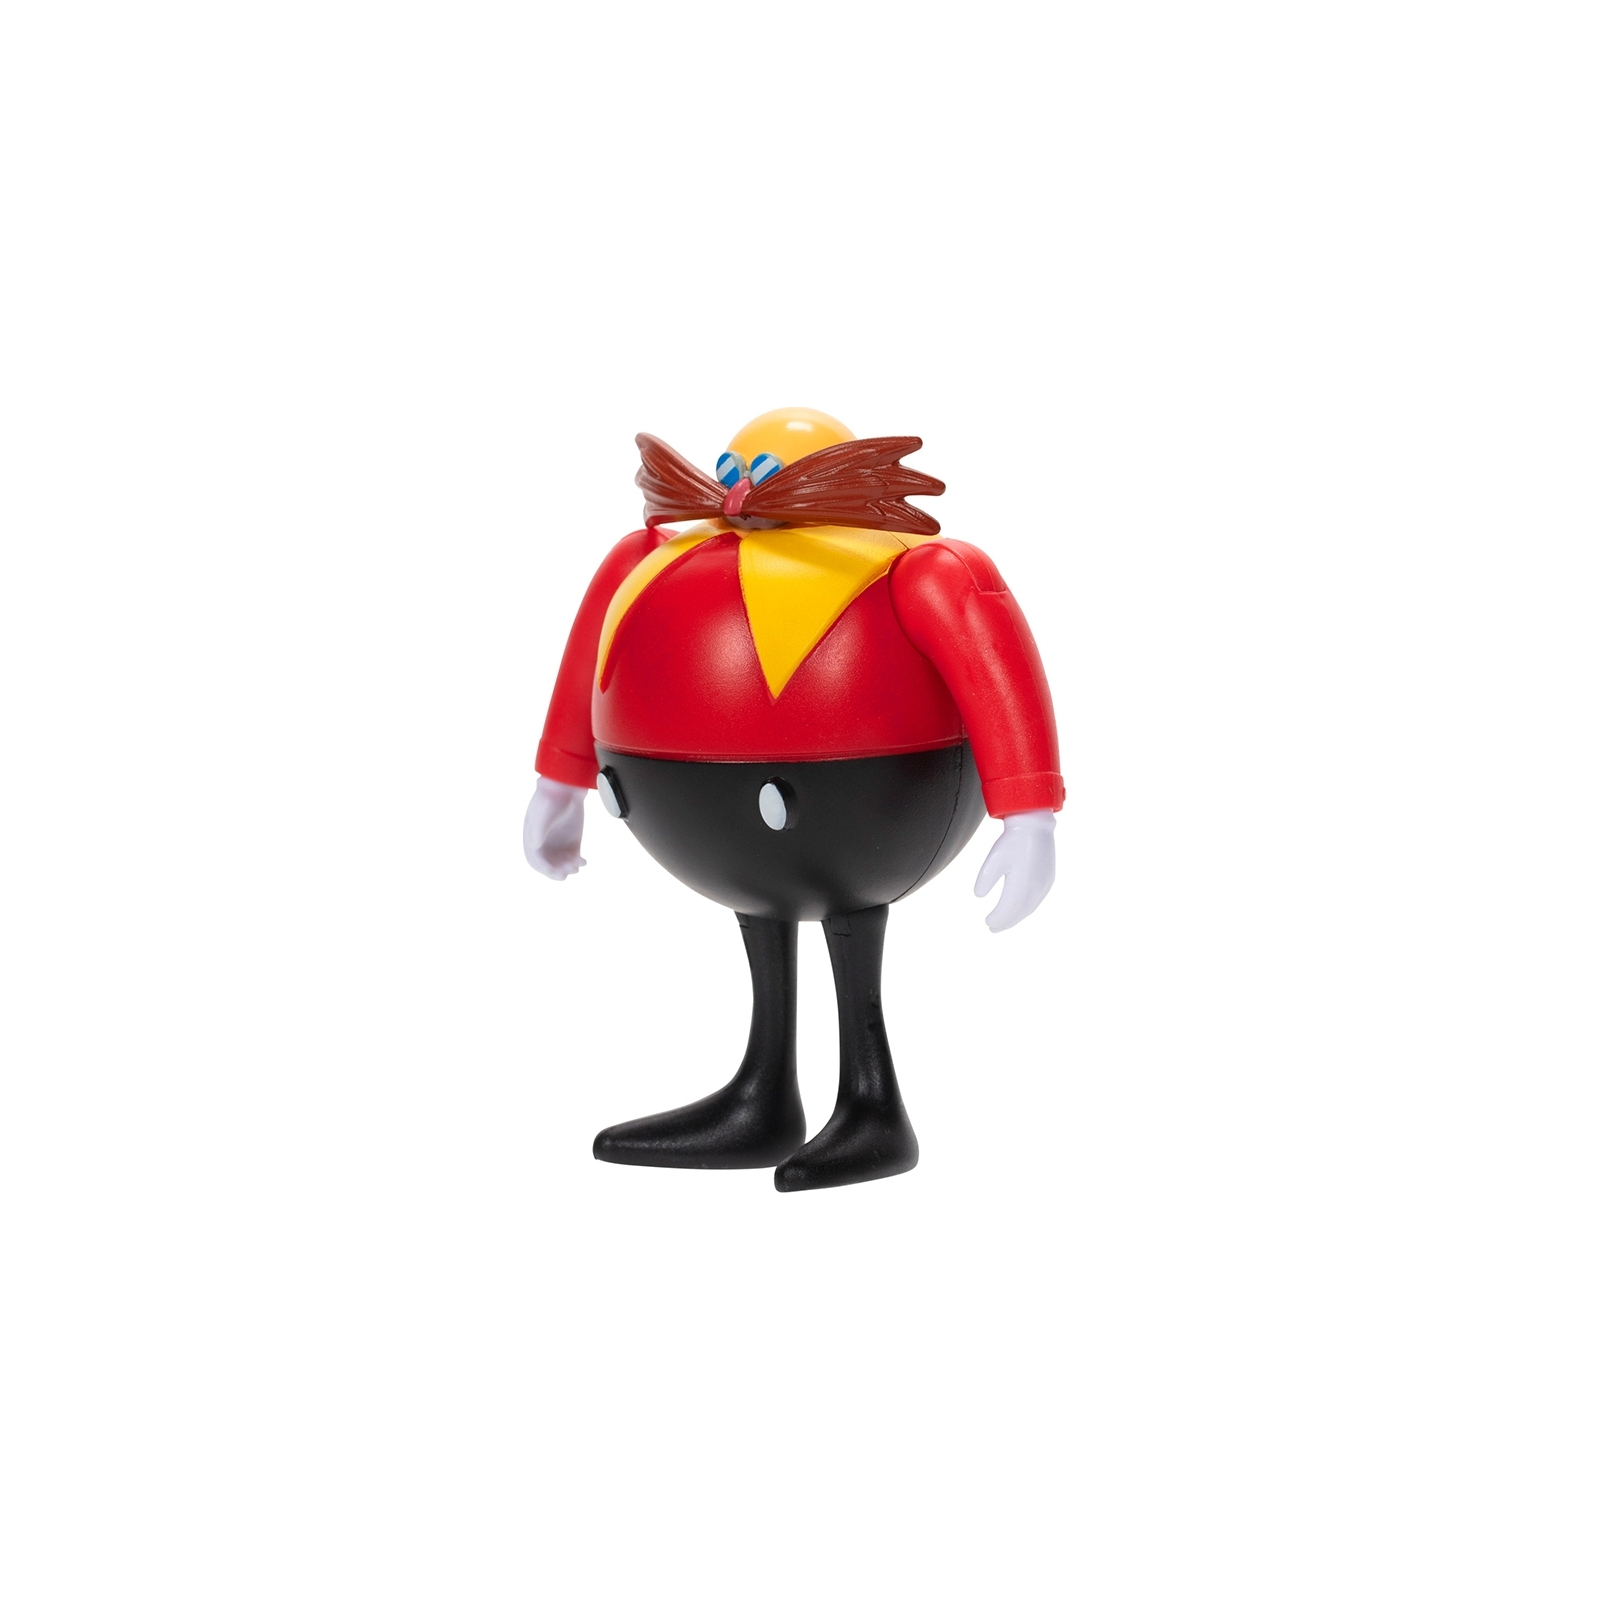 Фигурка Sonic the Hedgehog с артикуляцией - Классический Доктор Эггман 6 см (41435i) изображение 3